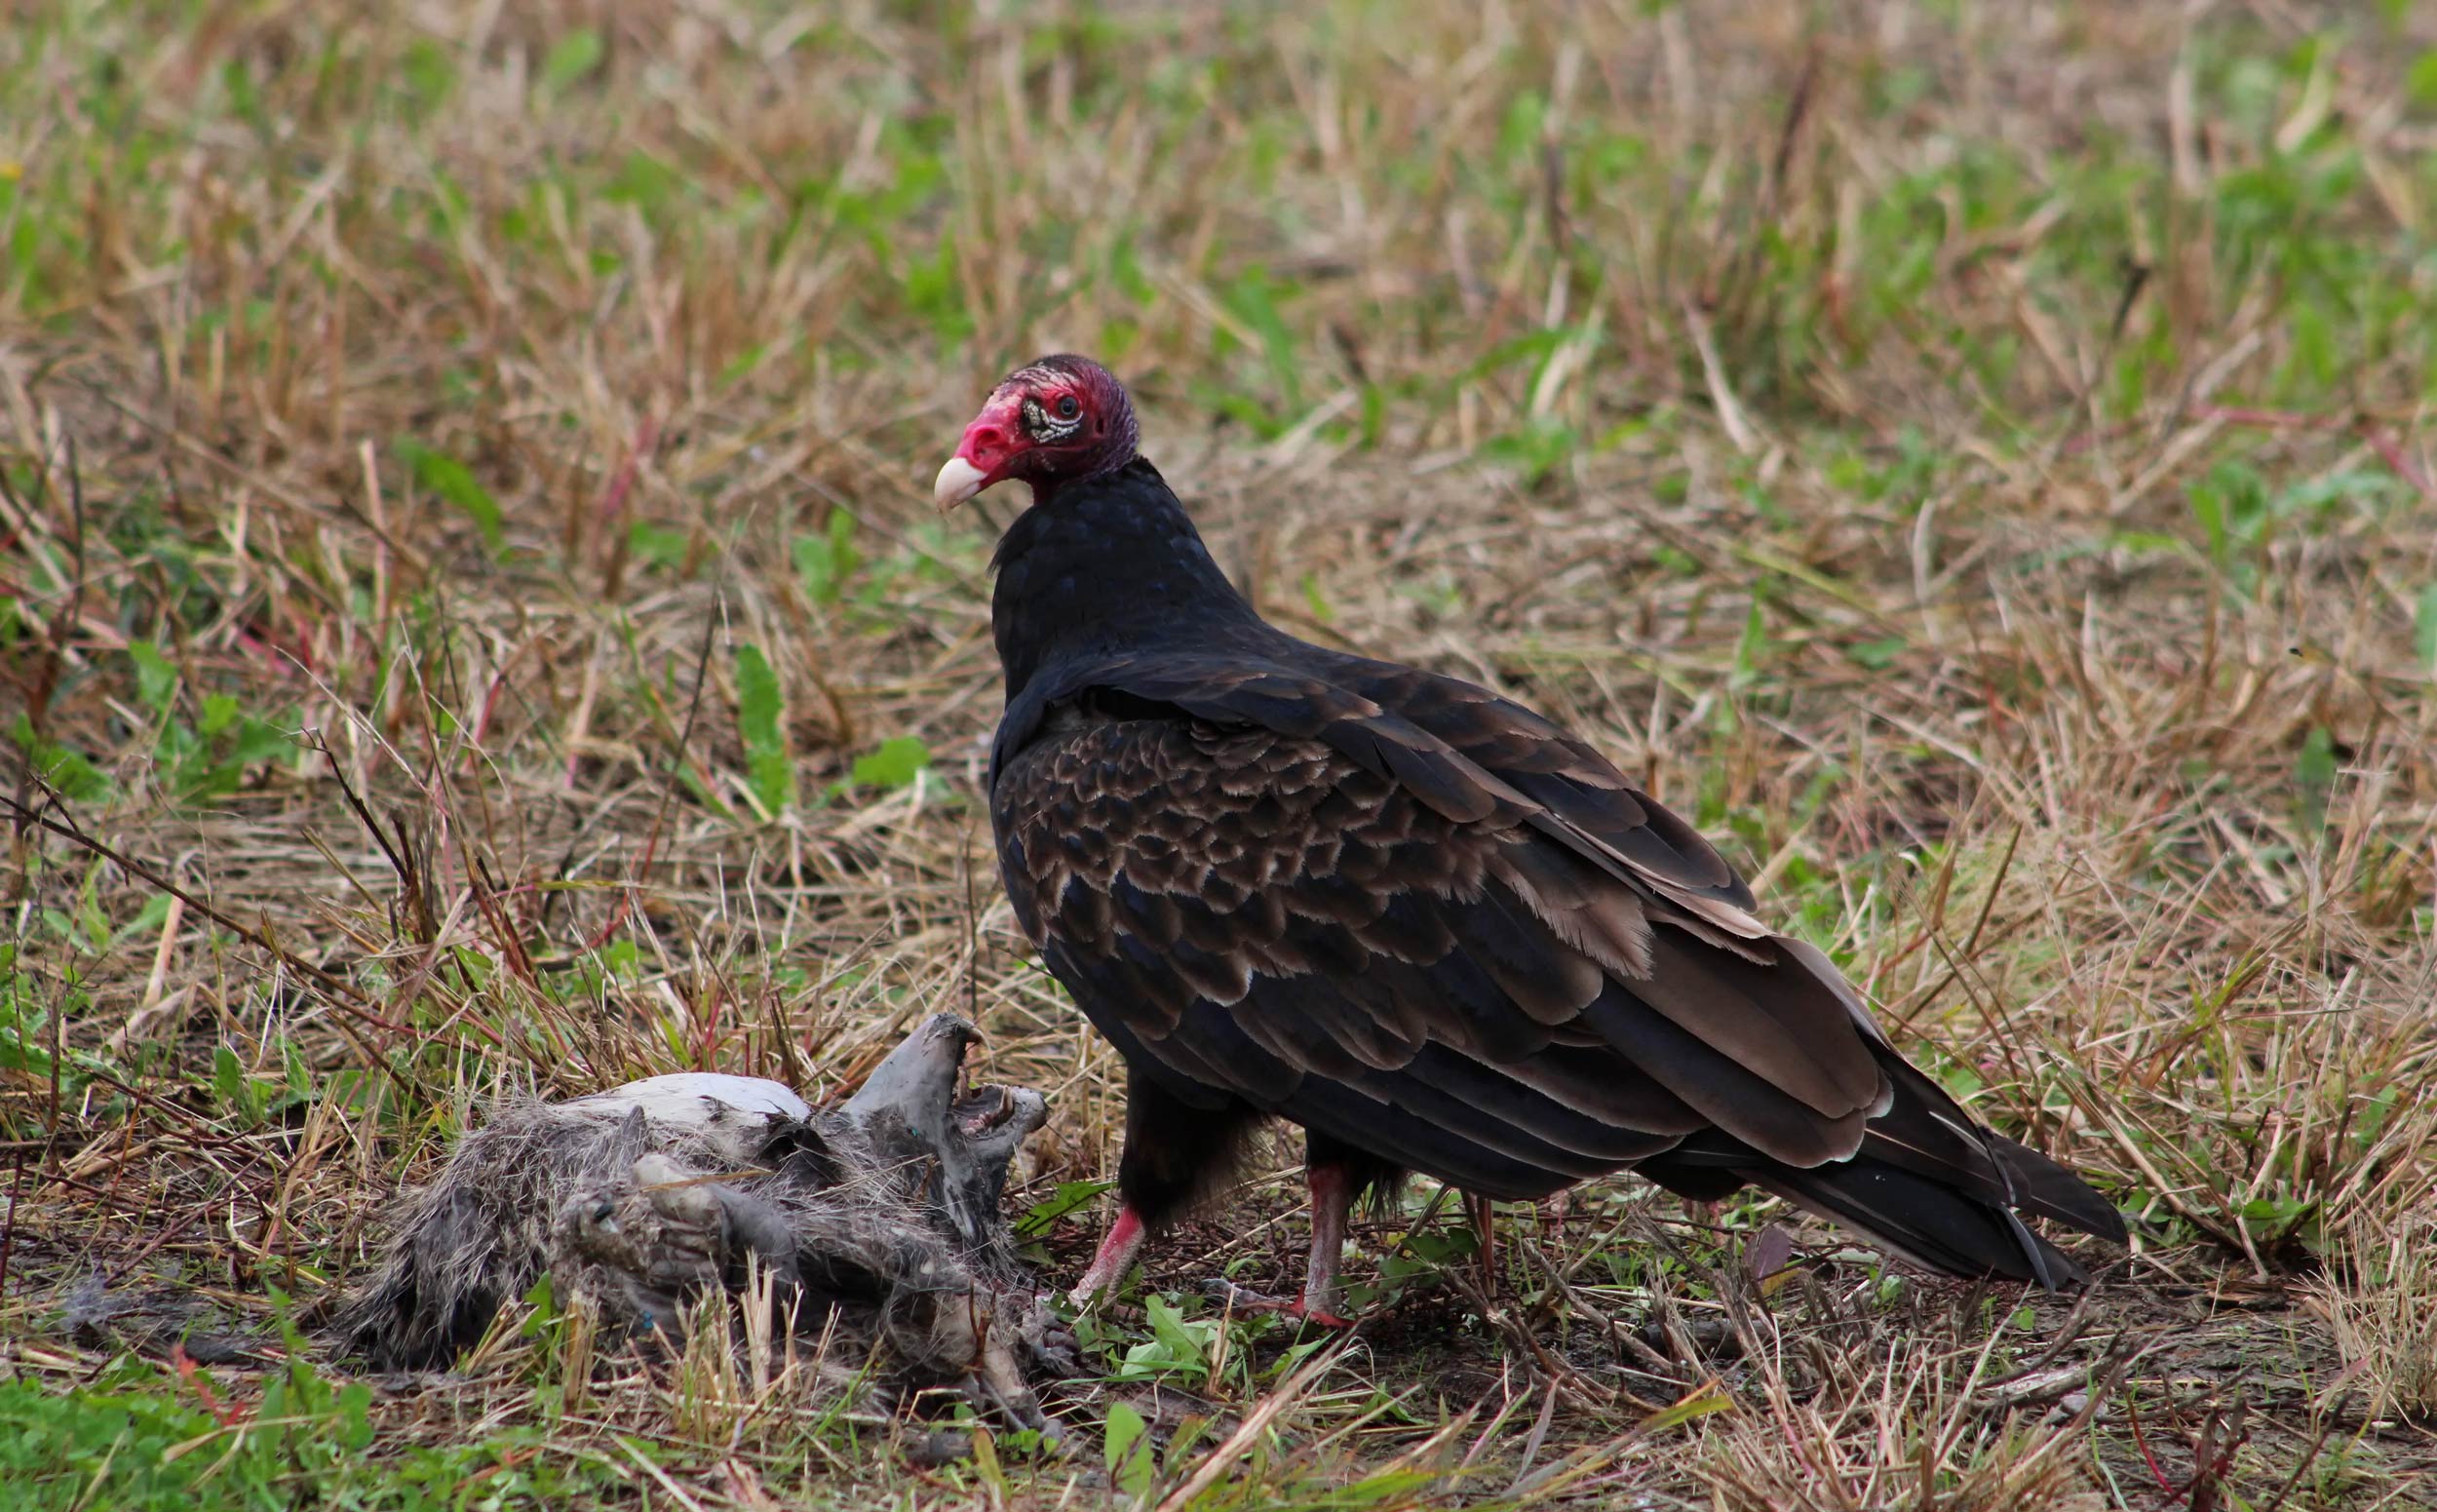 Turkey vulture eating carrion.